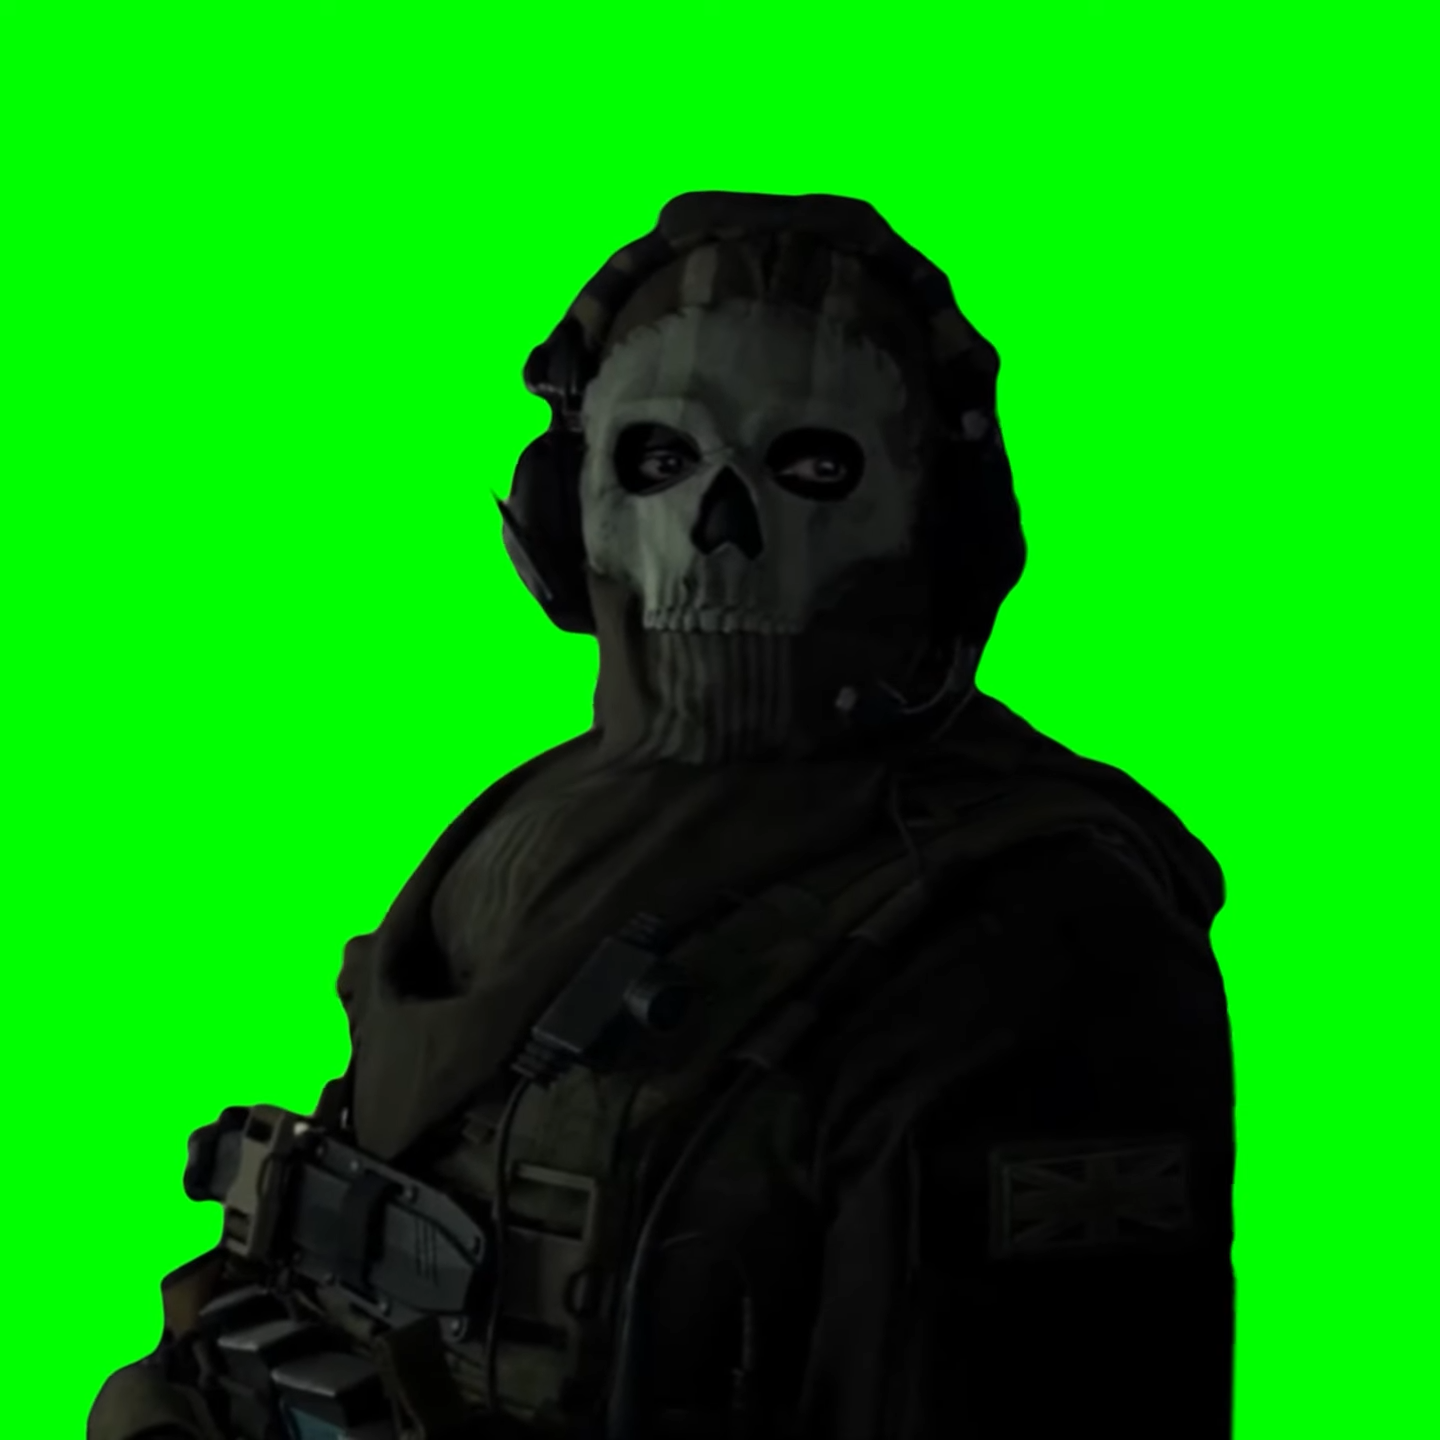 MW2 Sad Ghost Staring Meme (Green Screen)NN CreatorSet